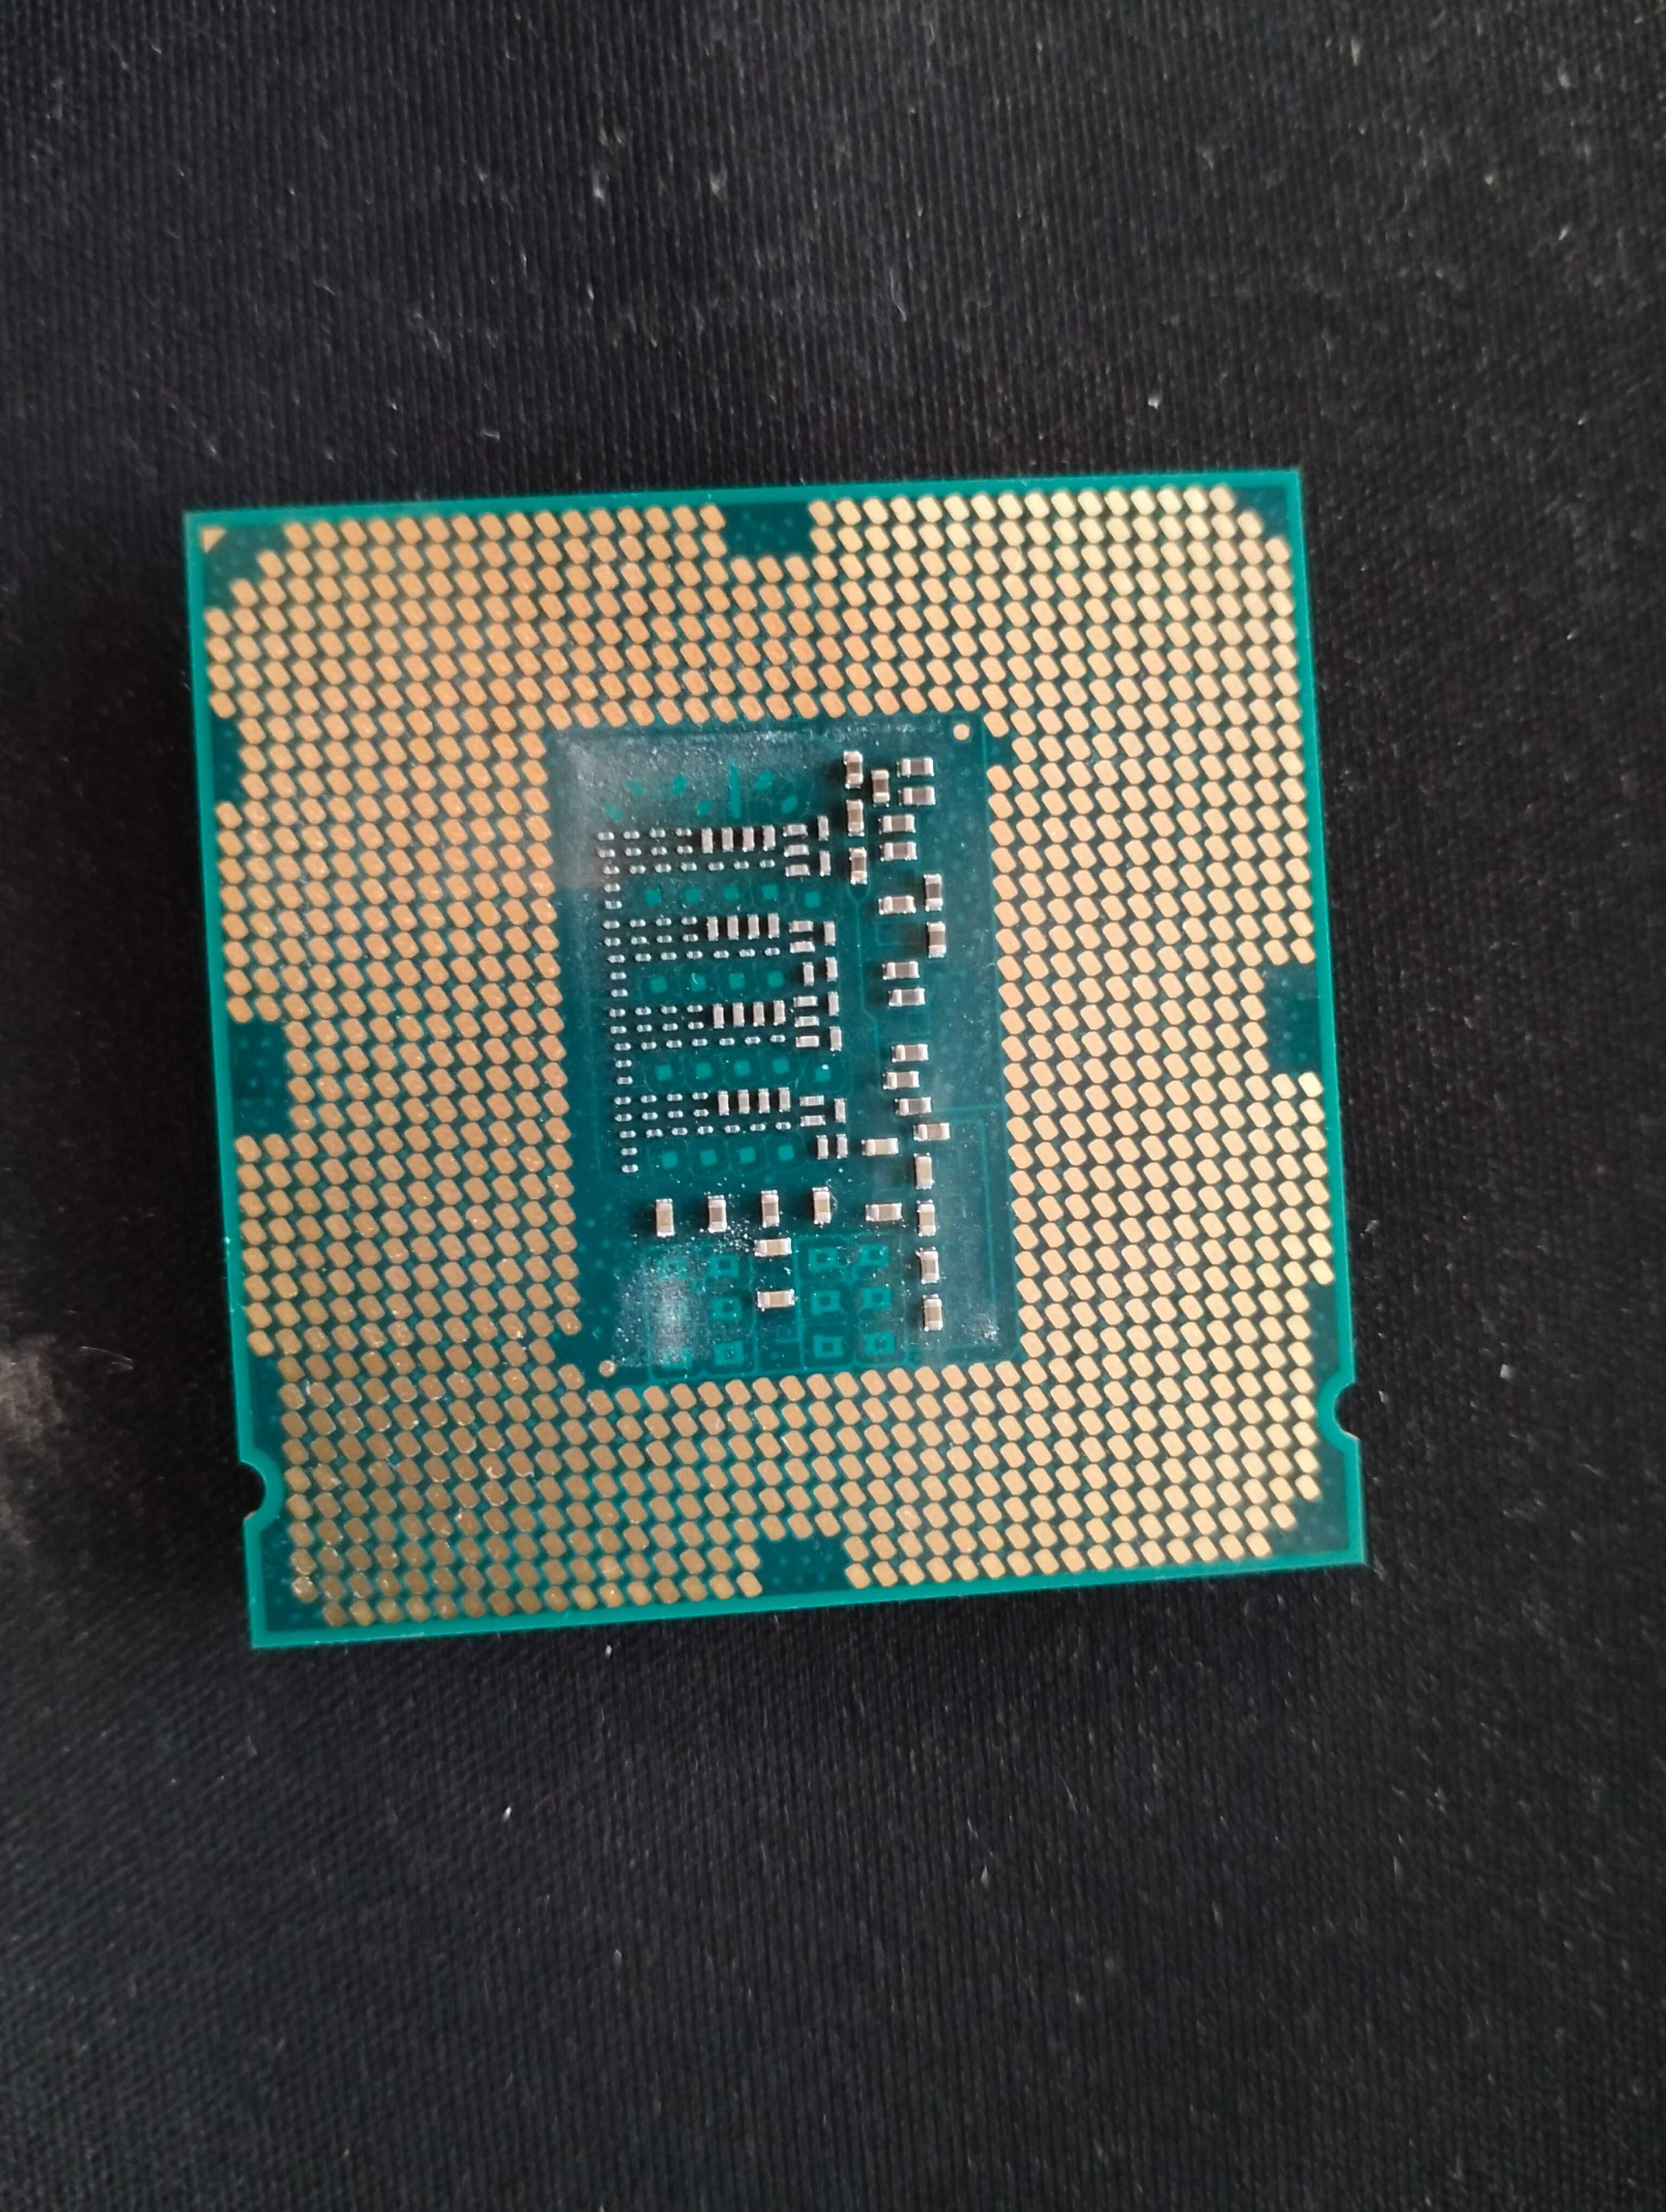 Procesor intel core i5-4690 3.50GHZ